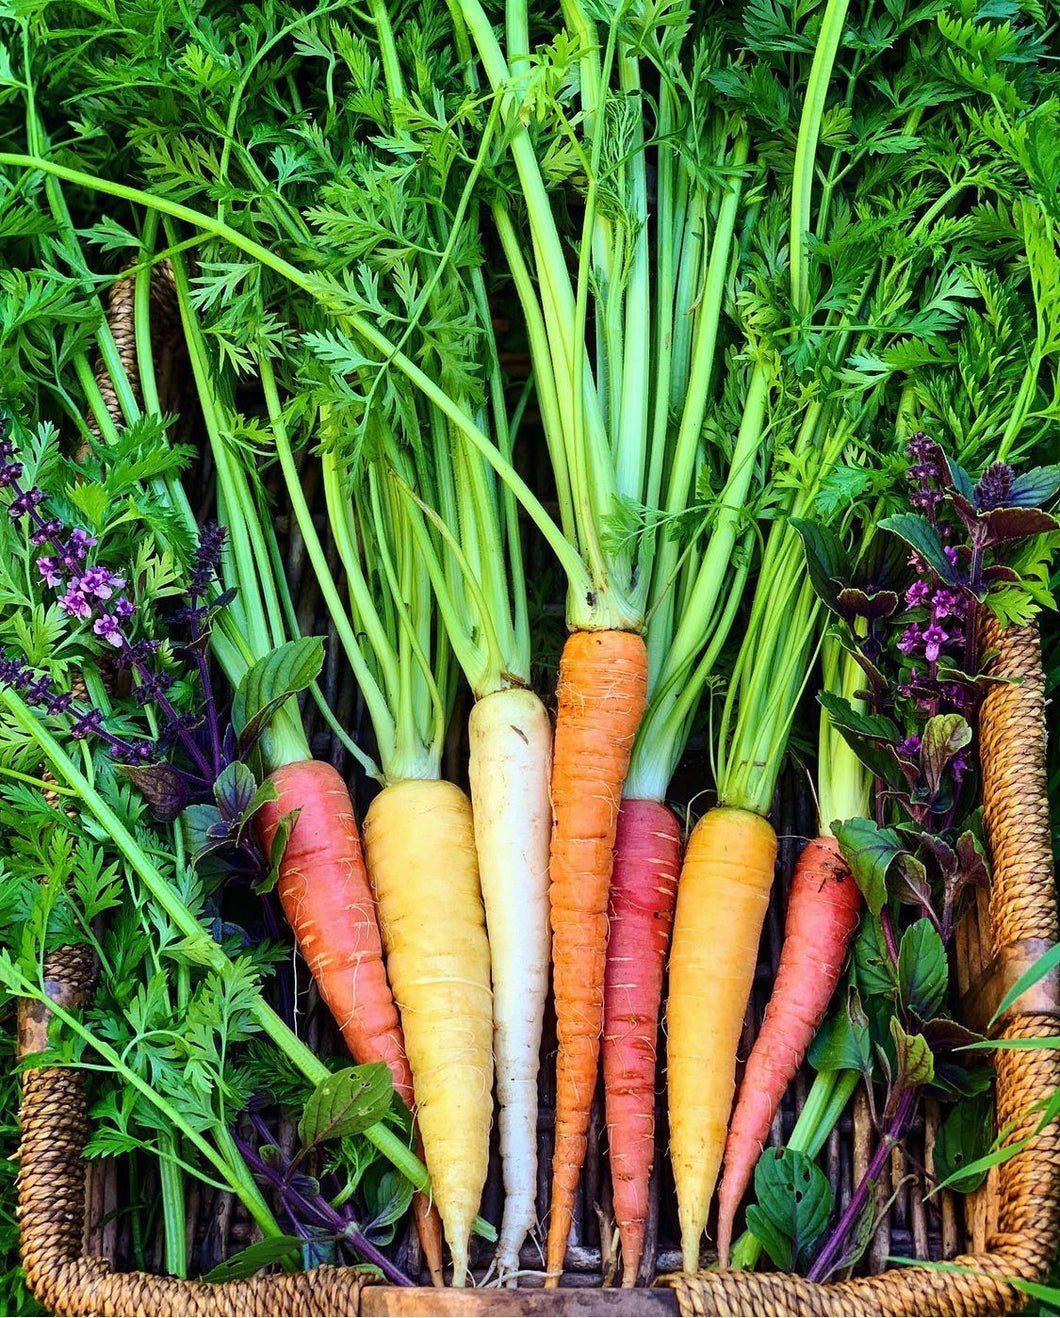 Carrot Rainbow Mix